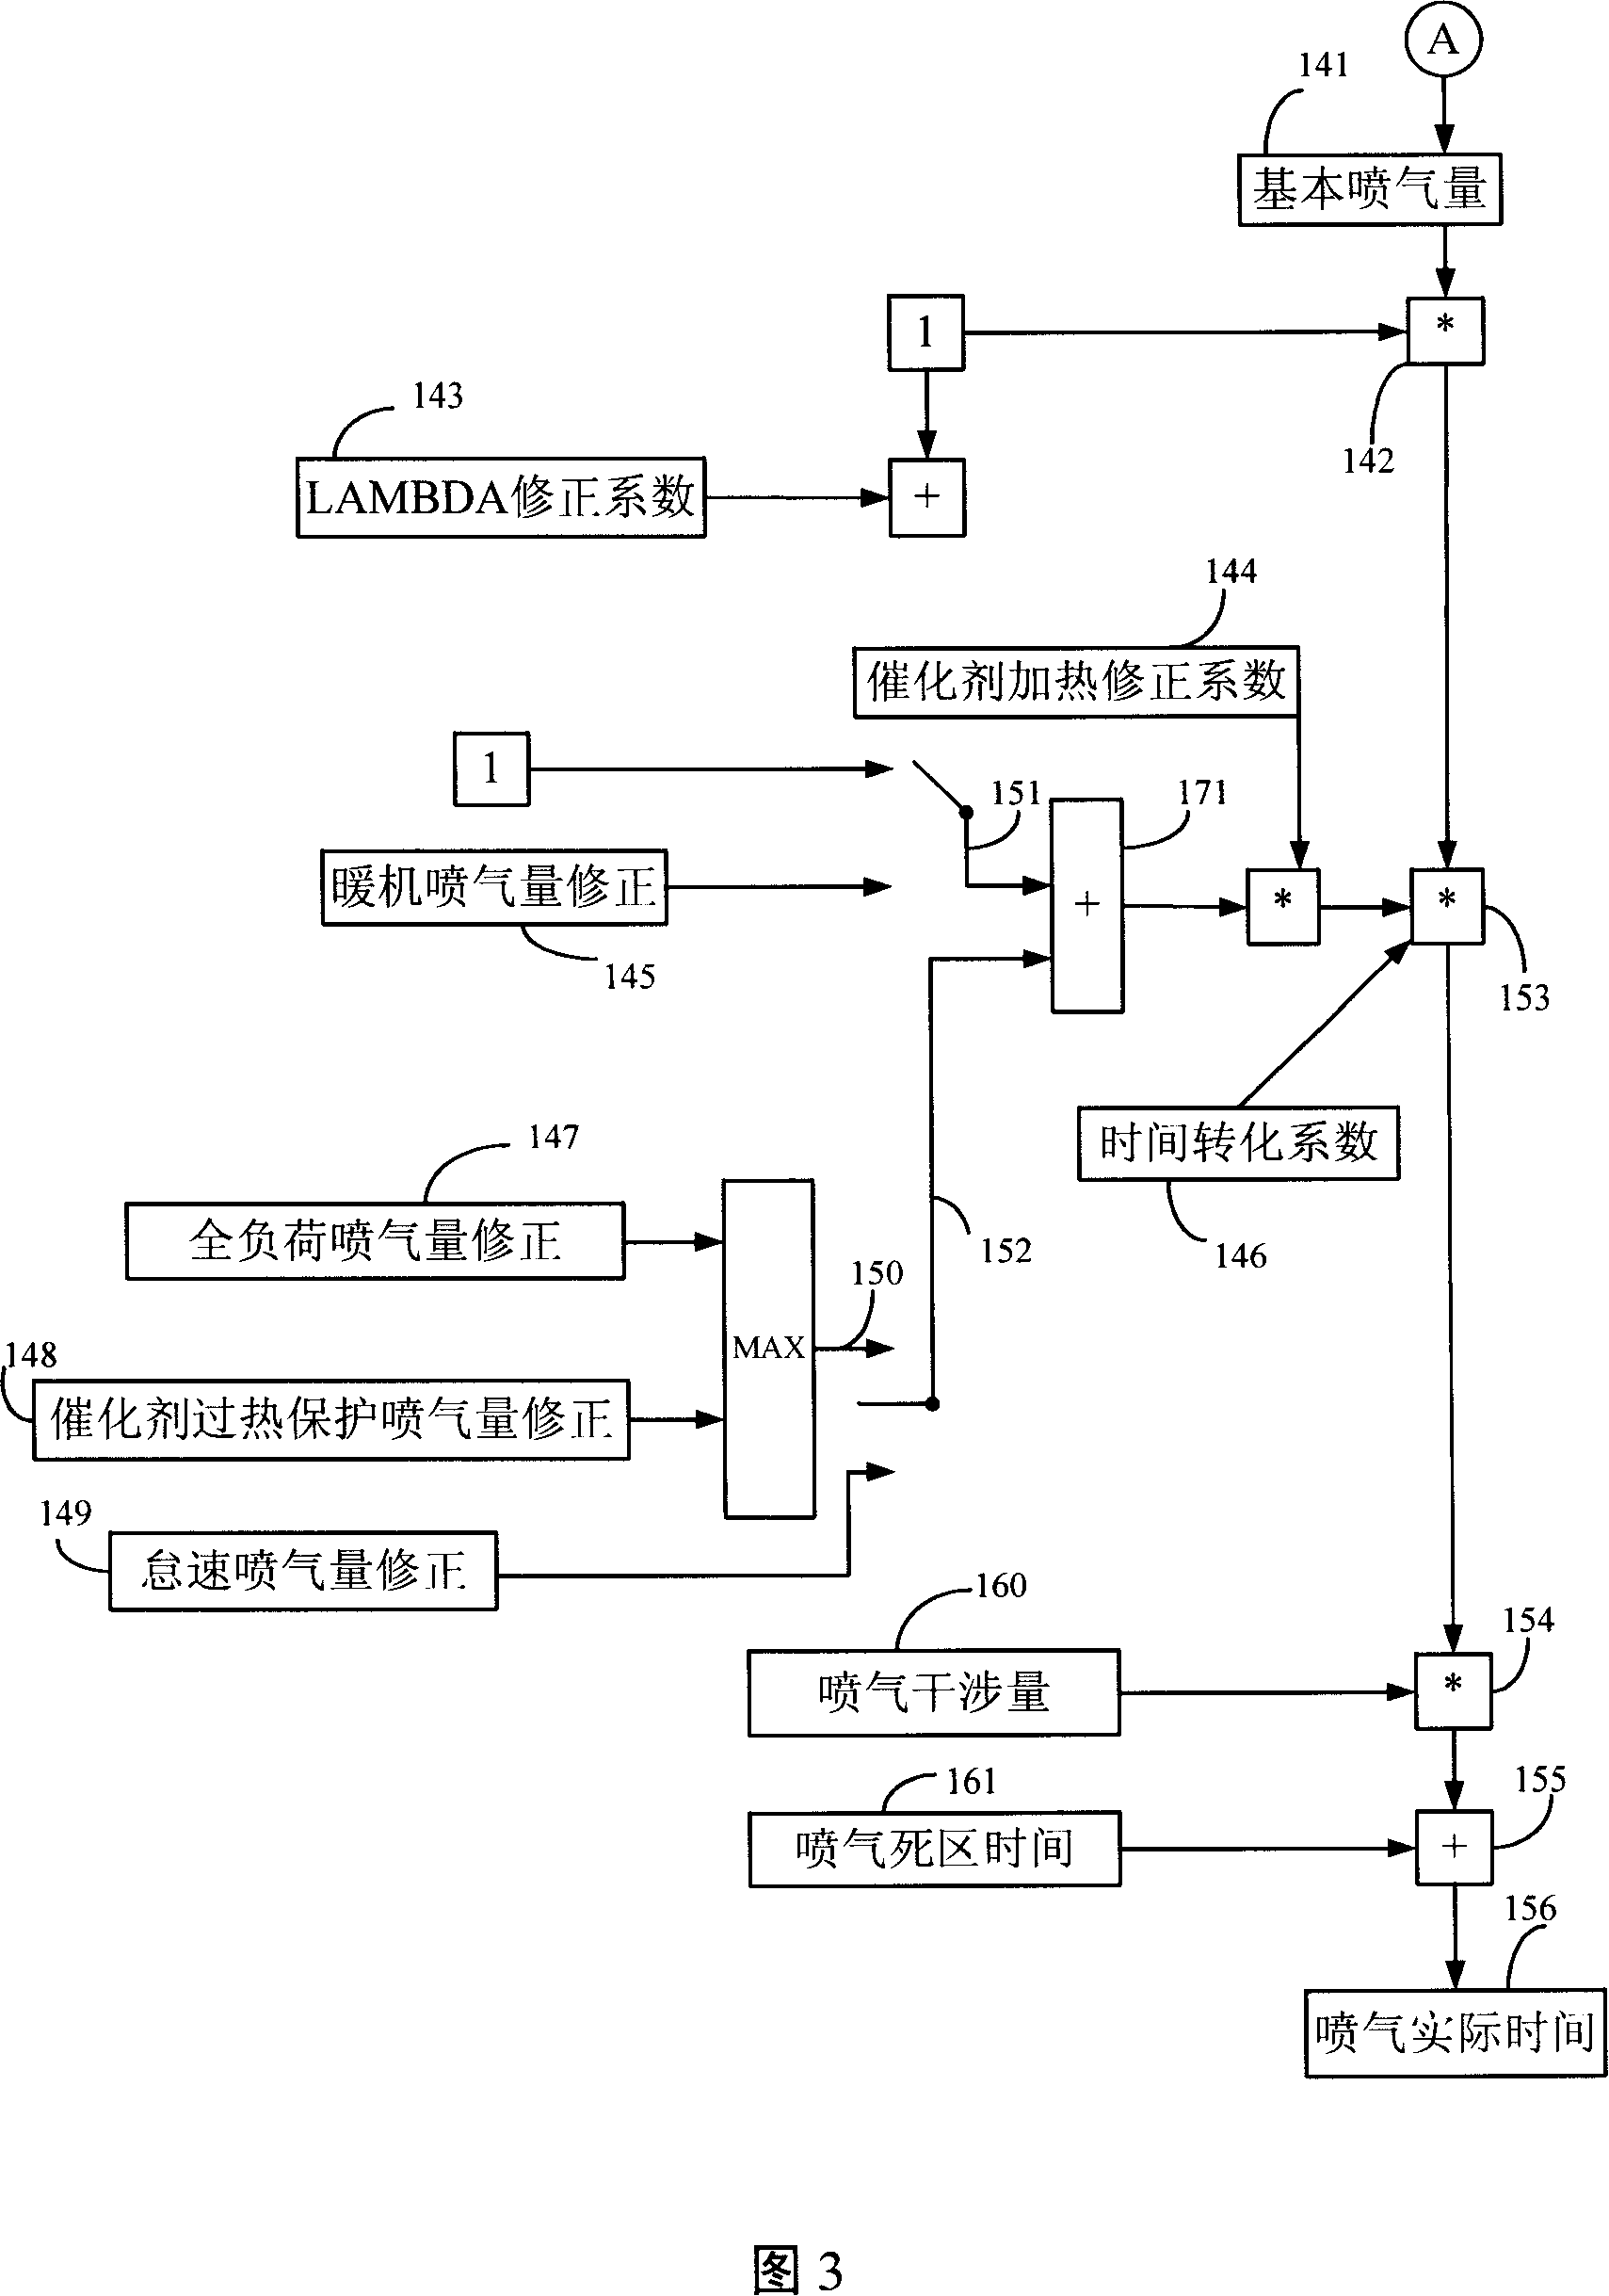 Engine oil gas mixing ECU control method